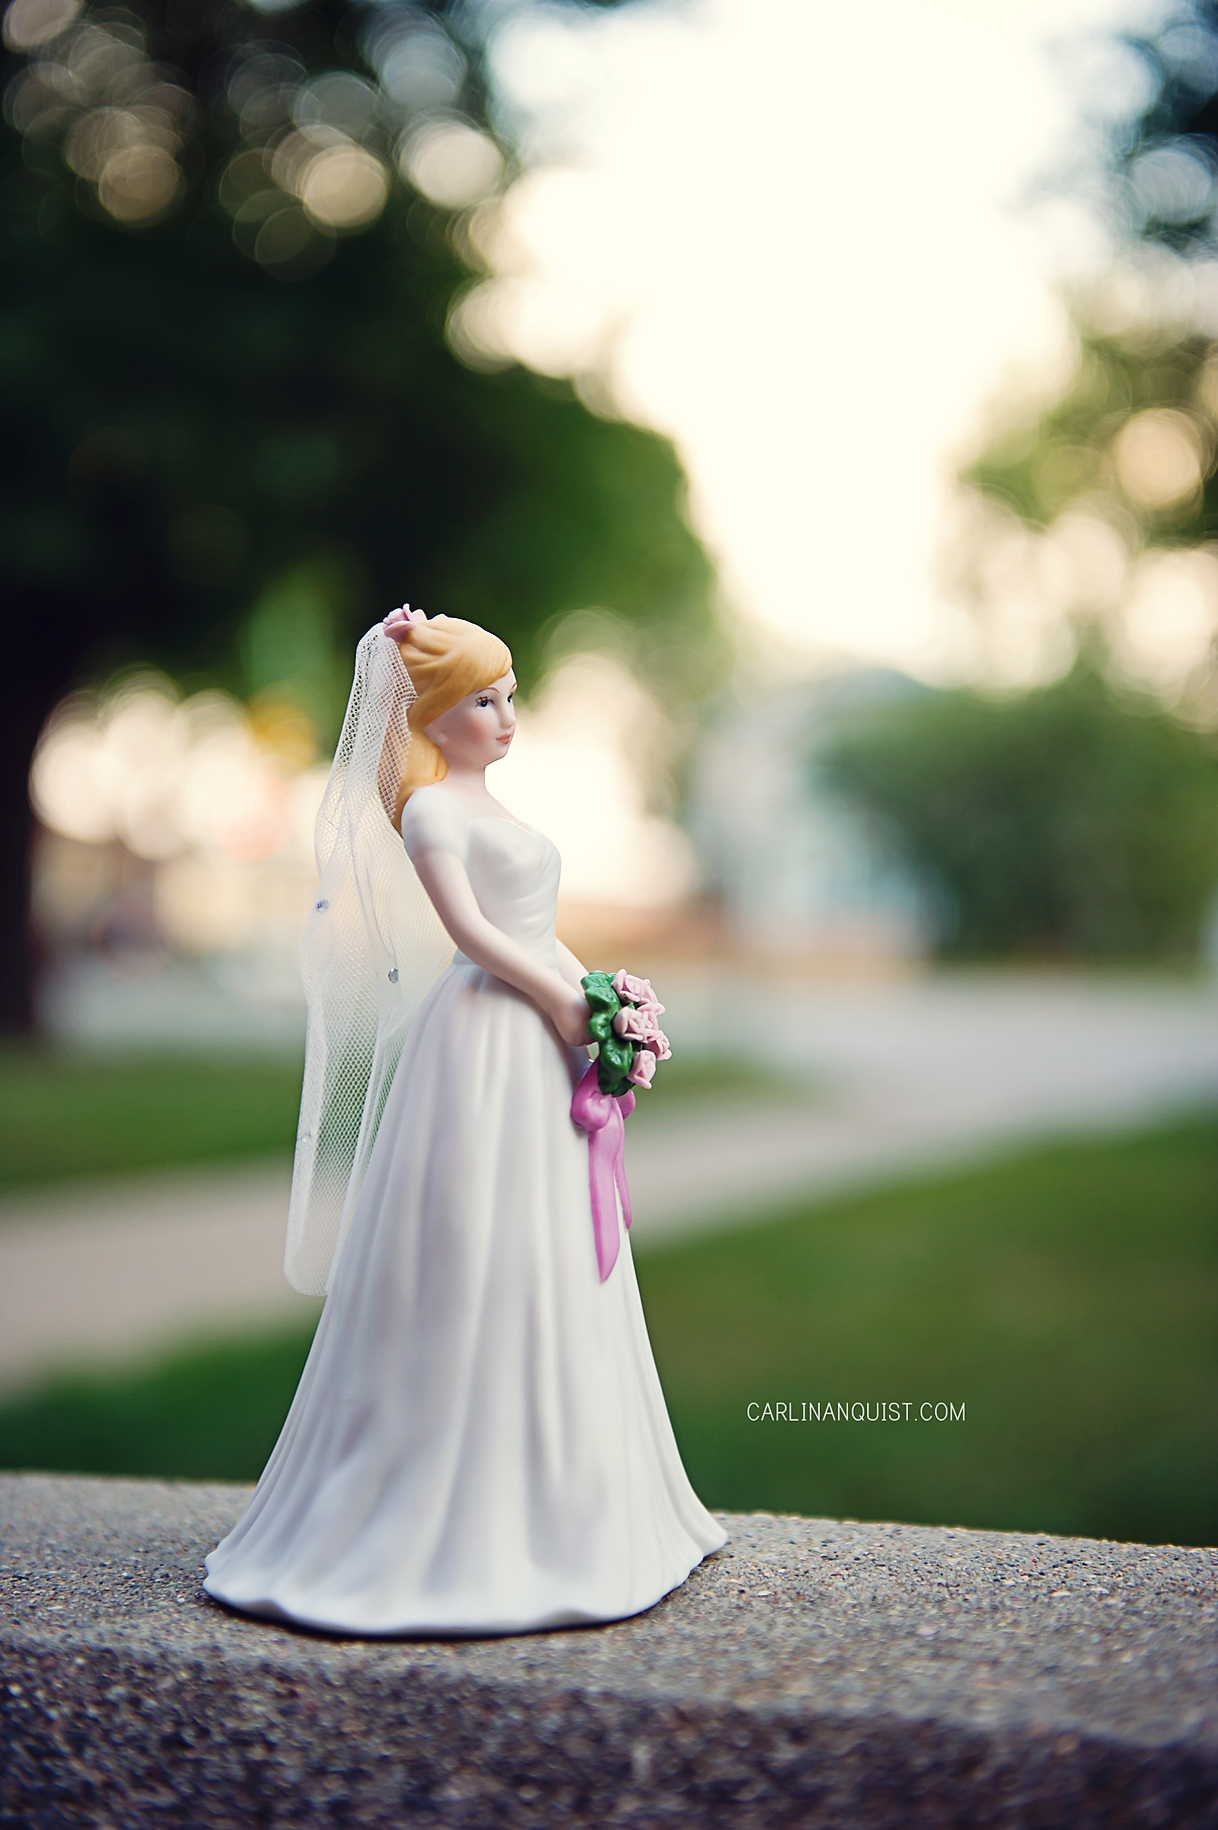 Patrick & Cindy Wedding // Porcelain Bride Doll | Saskatoon Wedding Photographer | Carlin Anquist Photography